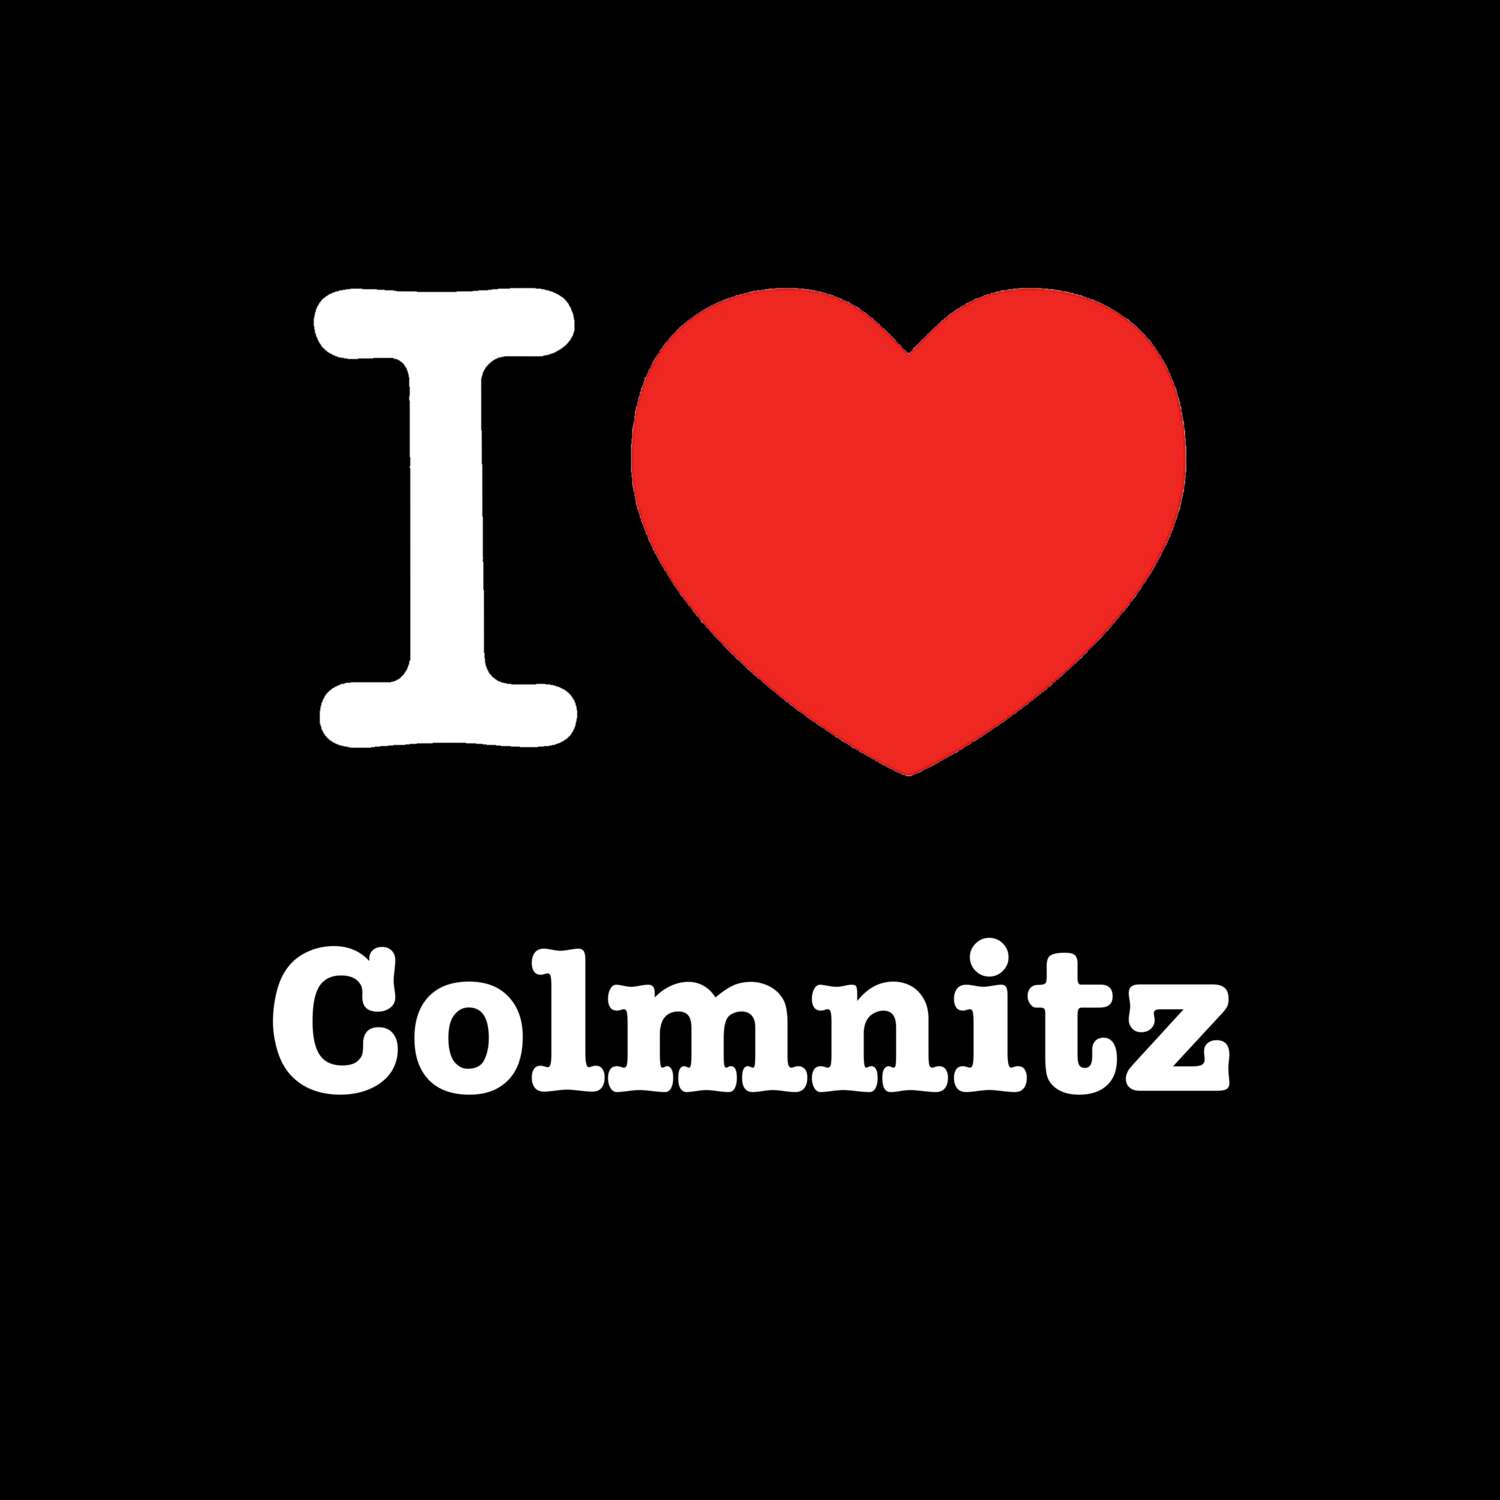 Colmnitz T-Shirt »I love«